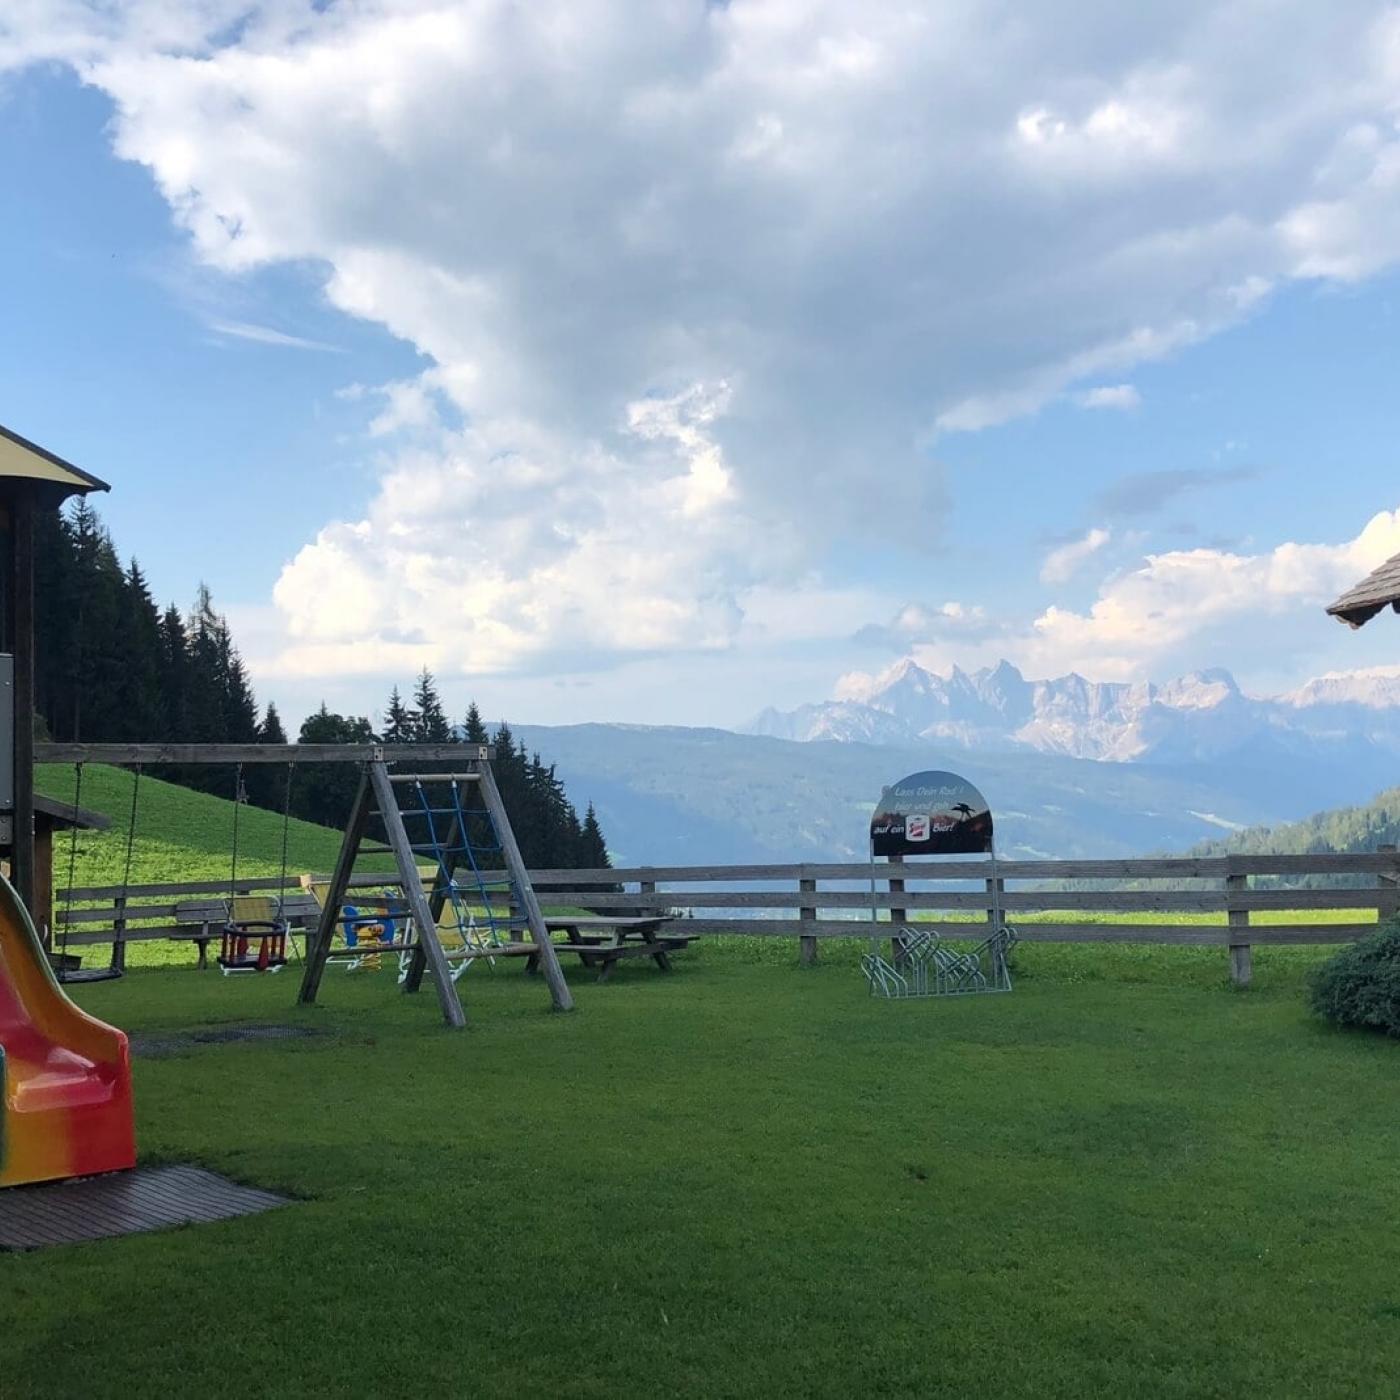 Familienausflug zum Berggasthof Sattelbauer in Flachau.